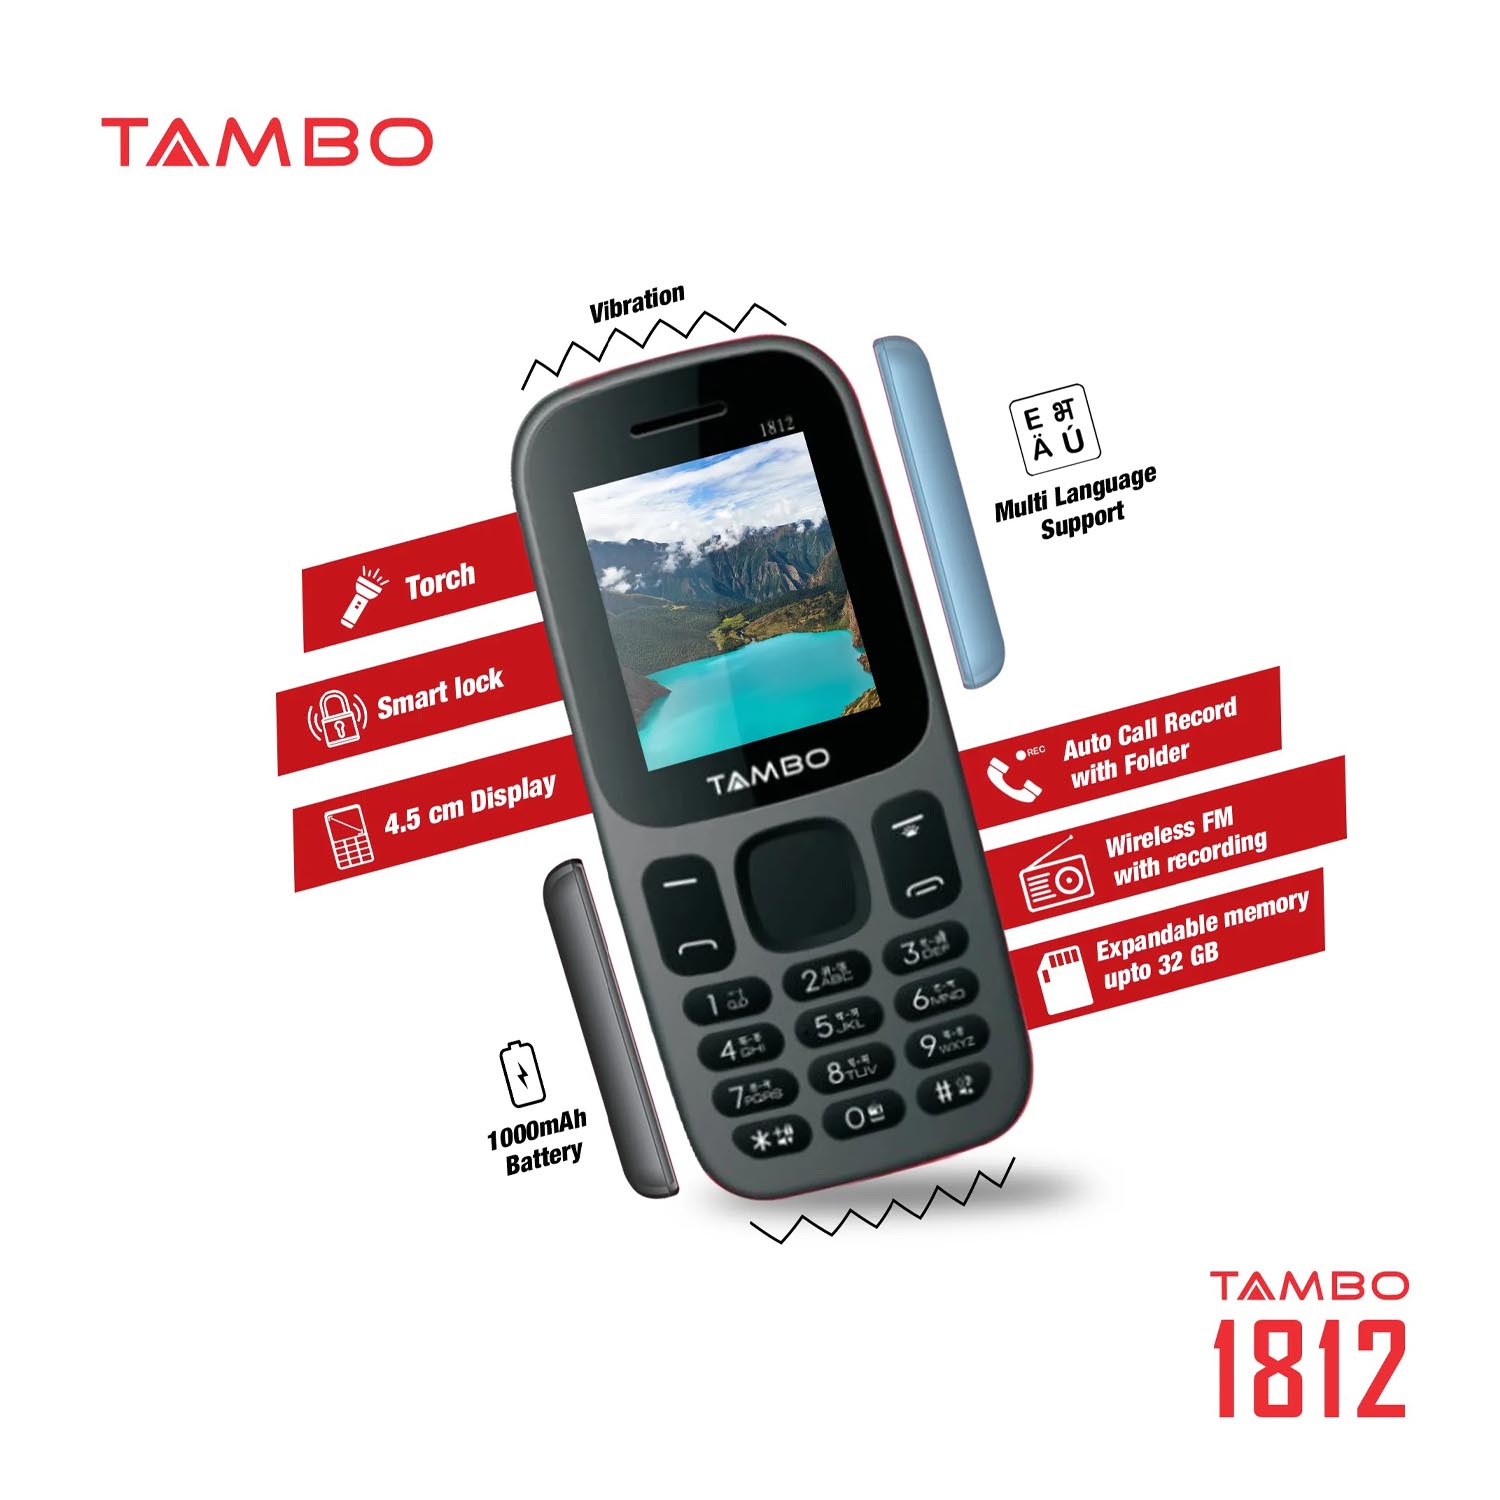 Tambo 1812 Keypad Phone